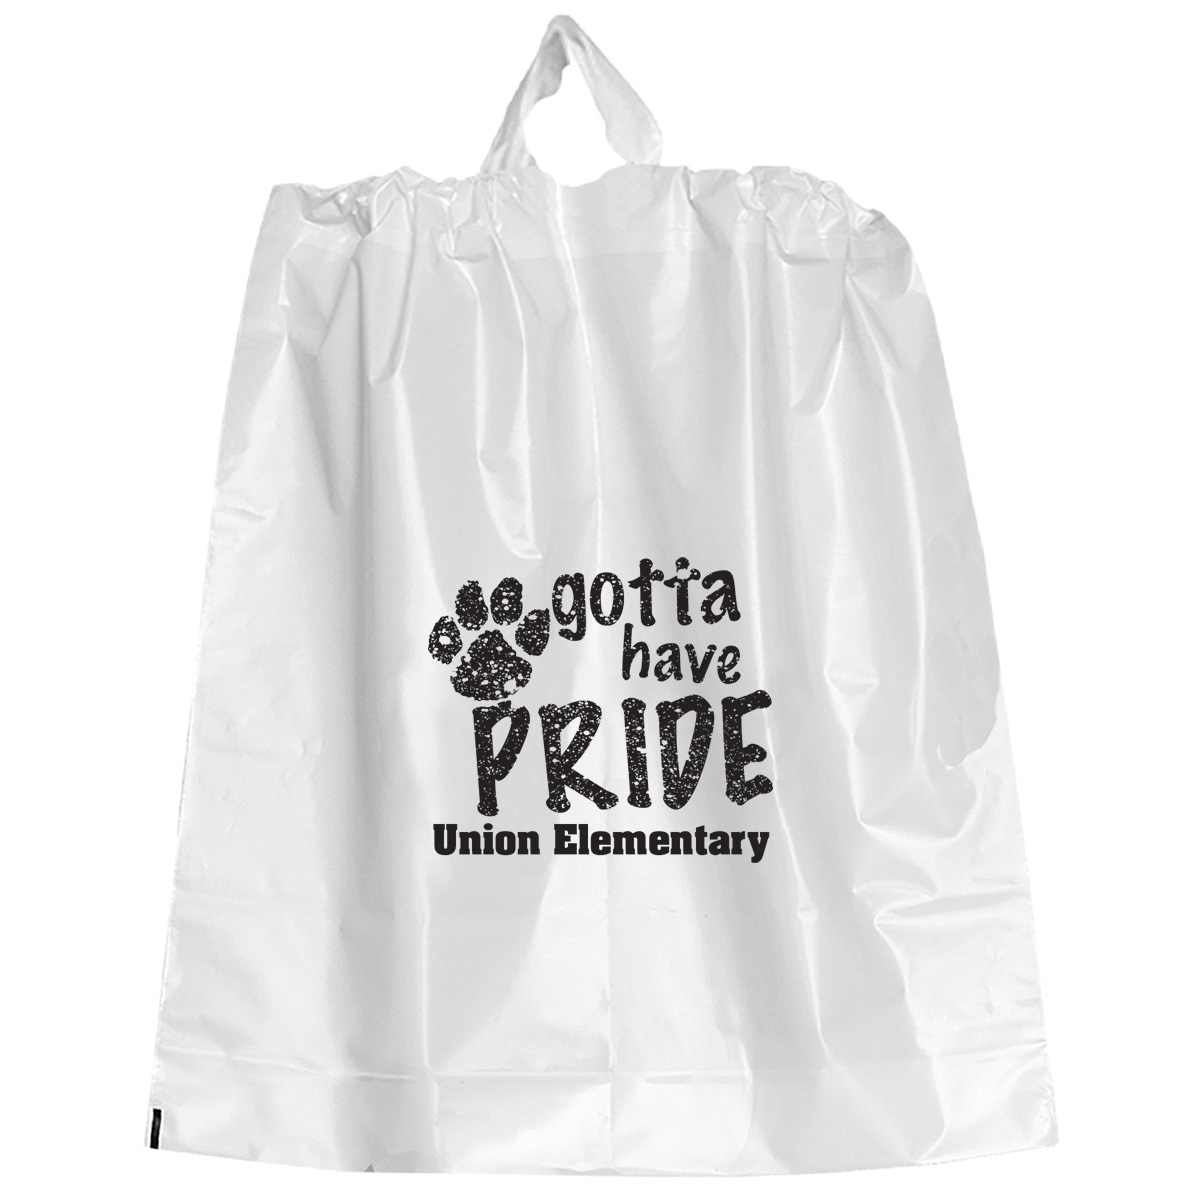 https://www.itselementary.com/-/media/Products/ie/school-spirit/bags-and-backpacks/elwfs-plastic-drawstring-bag-000.ashx